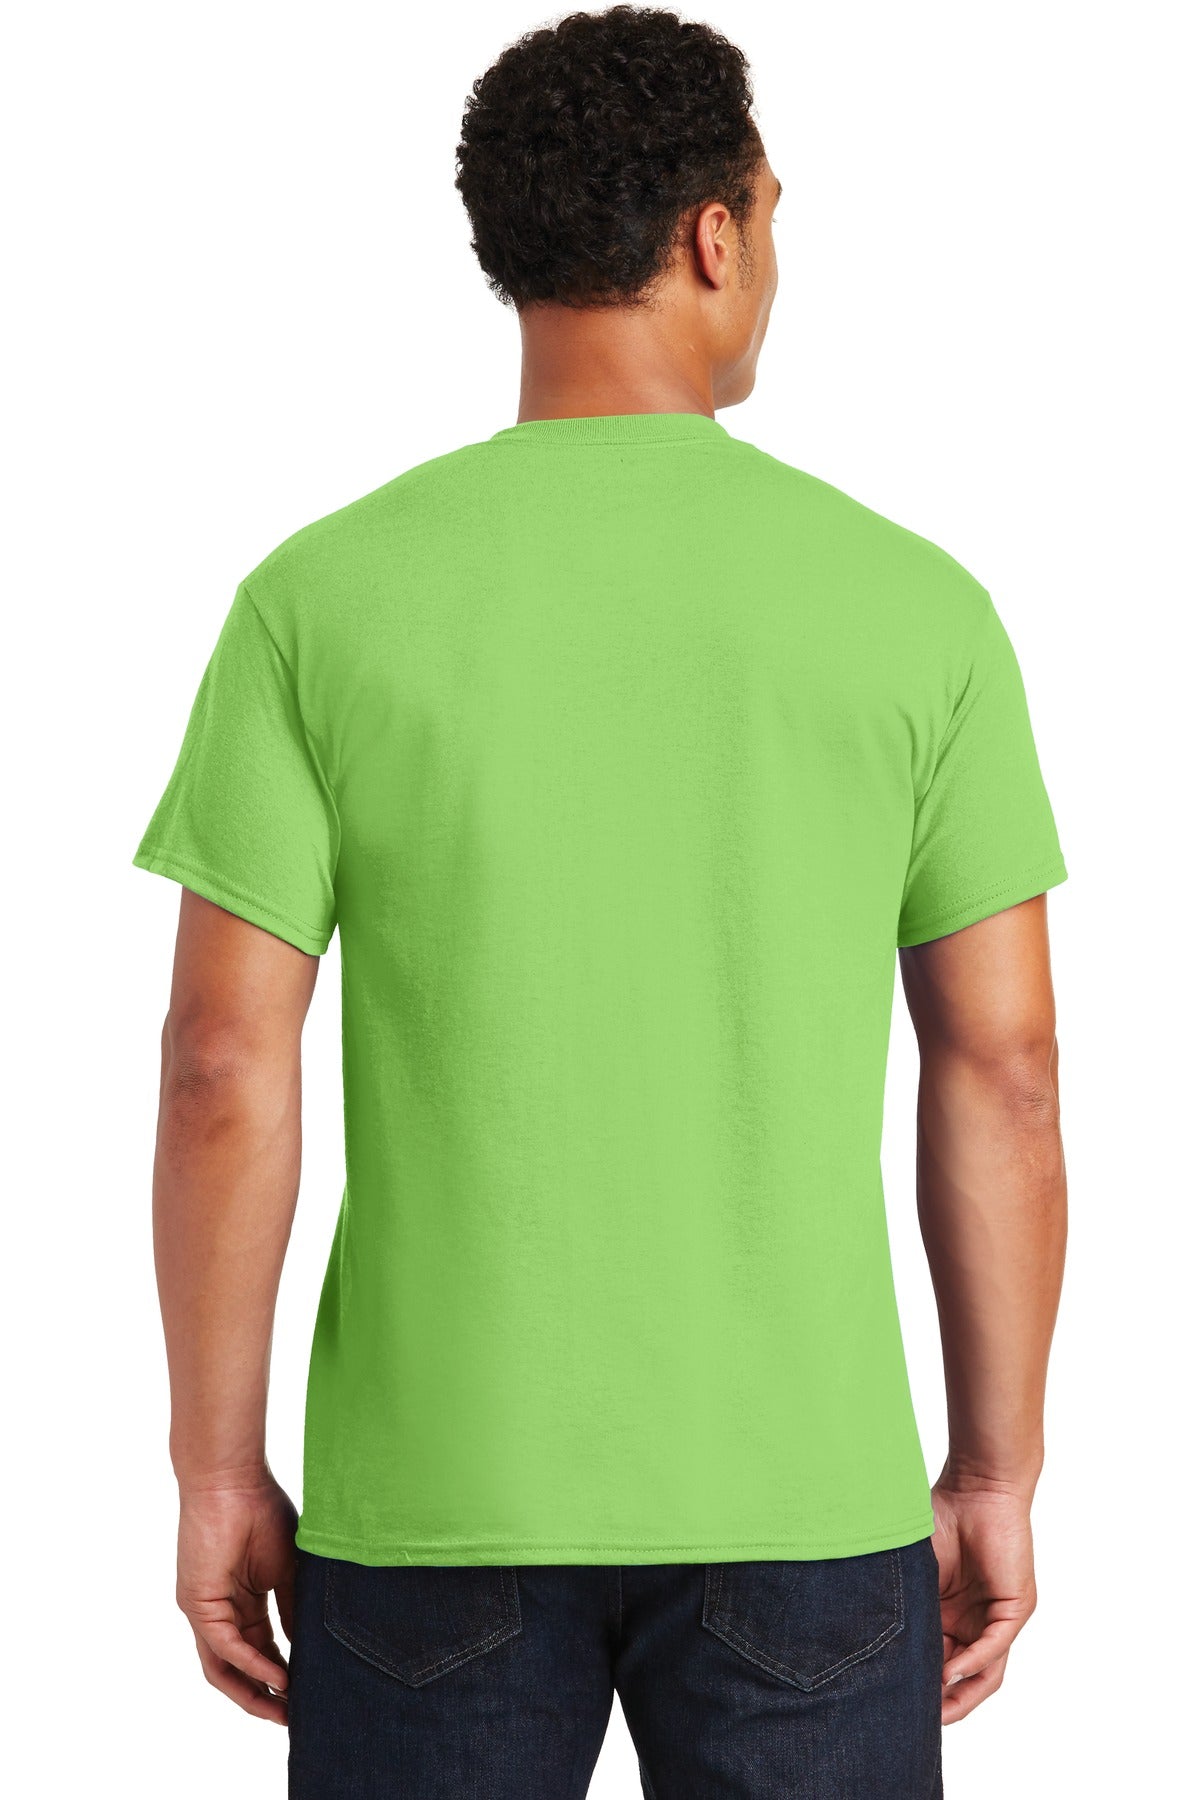 Gildan® - DryBlend® 50 Cotton/50 Poly T-Shirt. 8000 [Lime] - DFW Impression